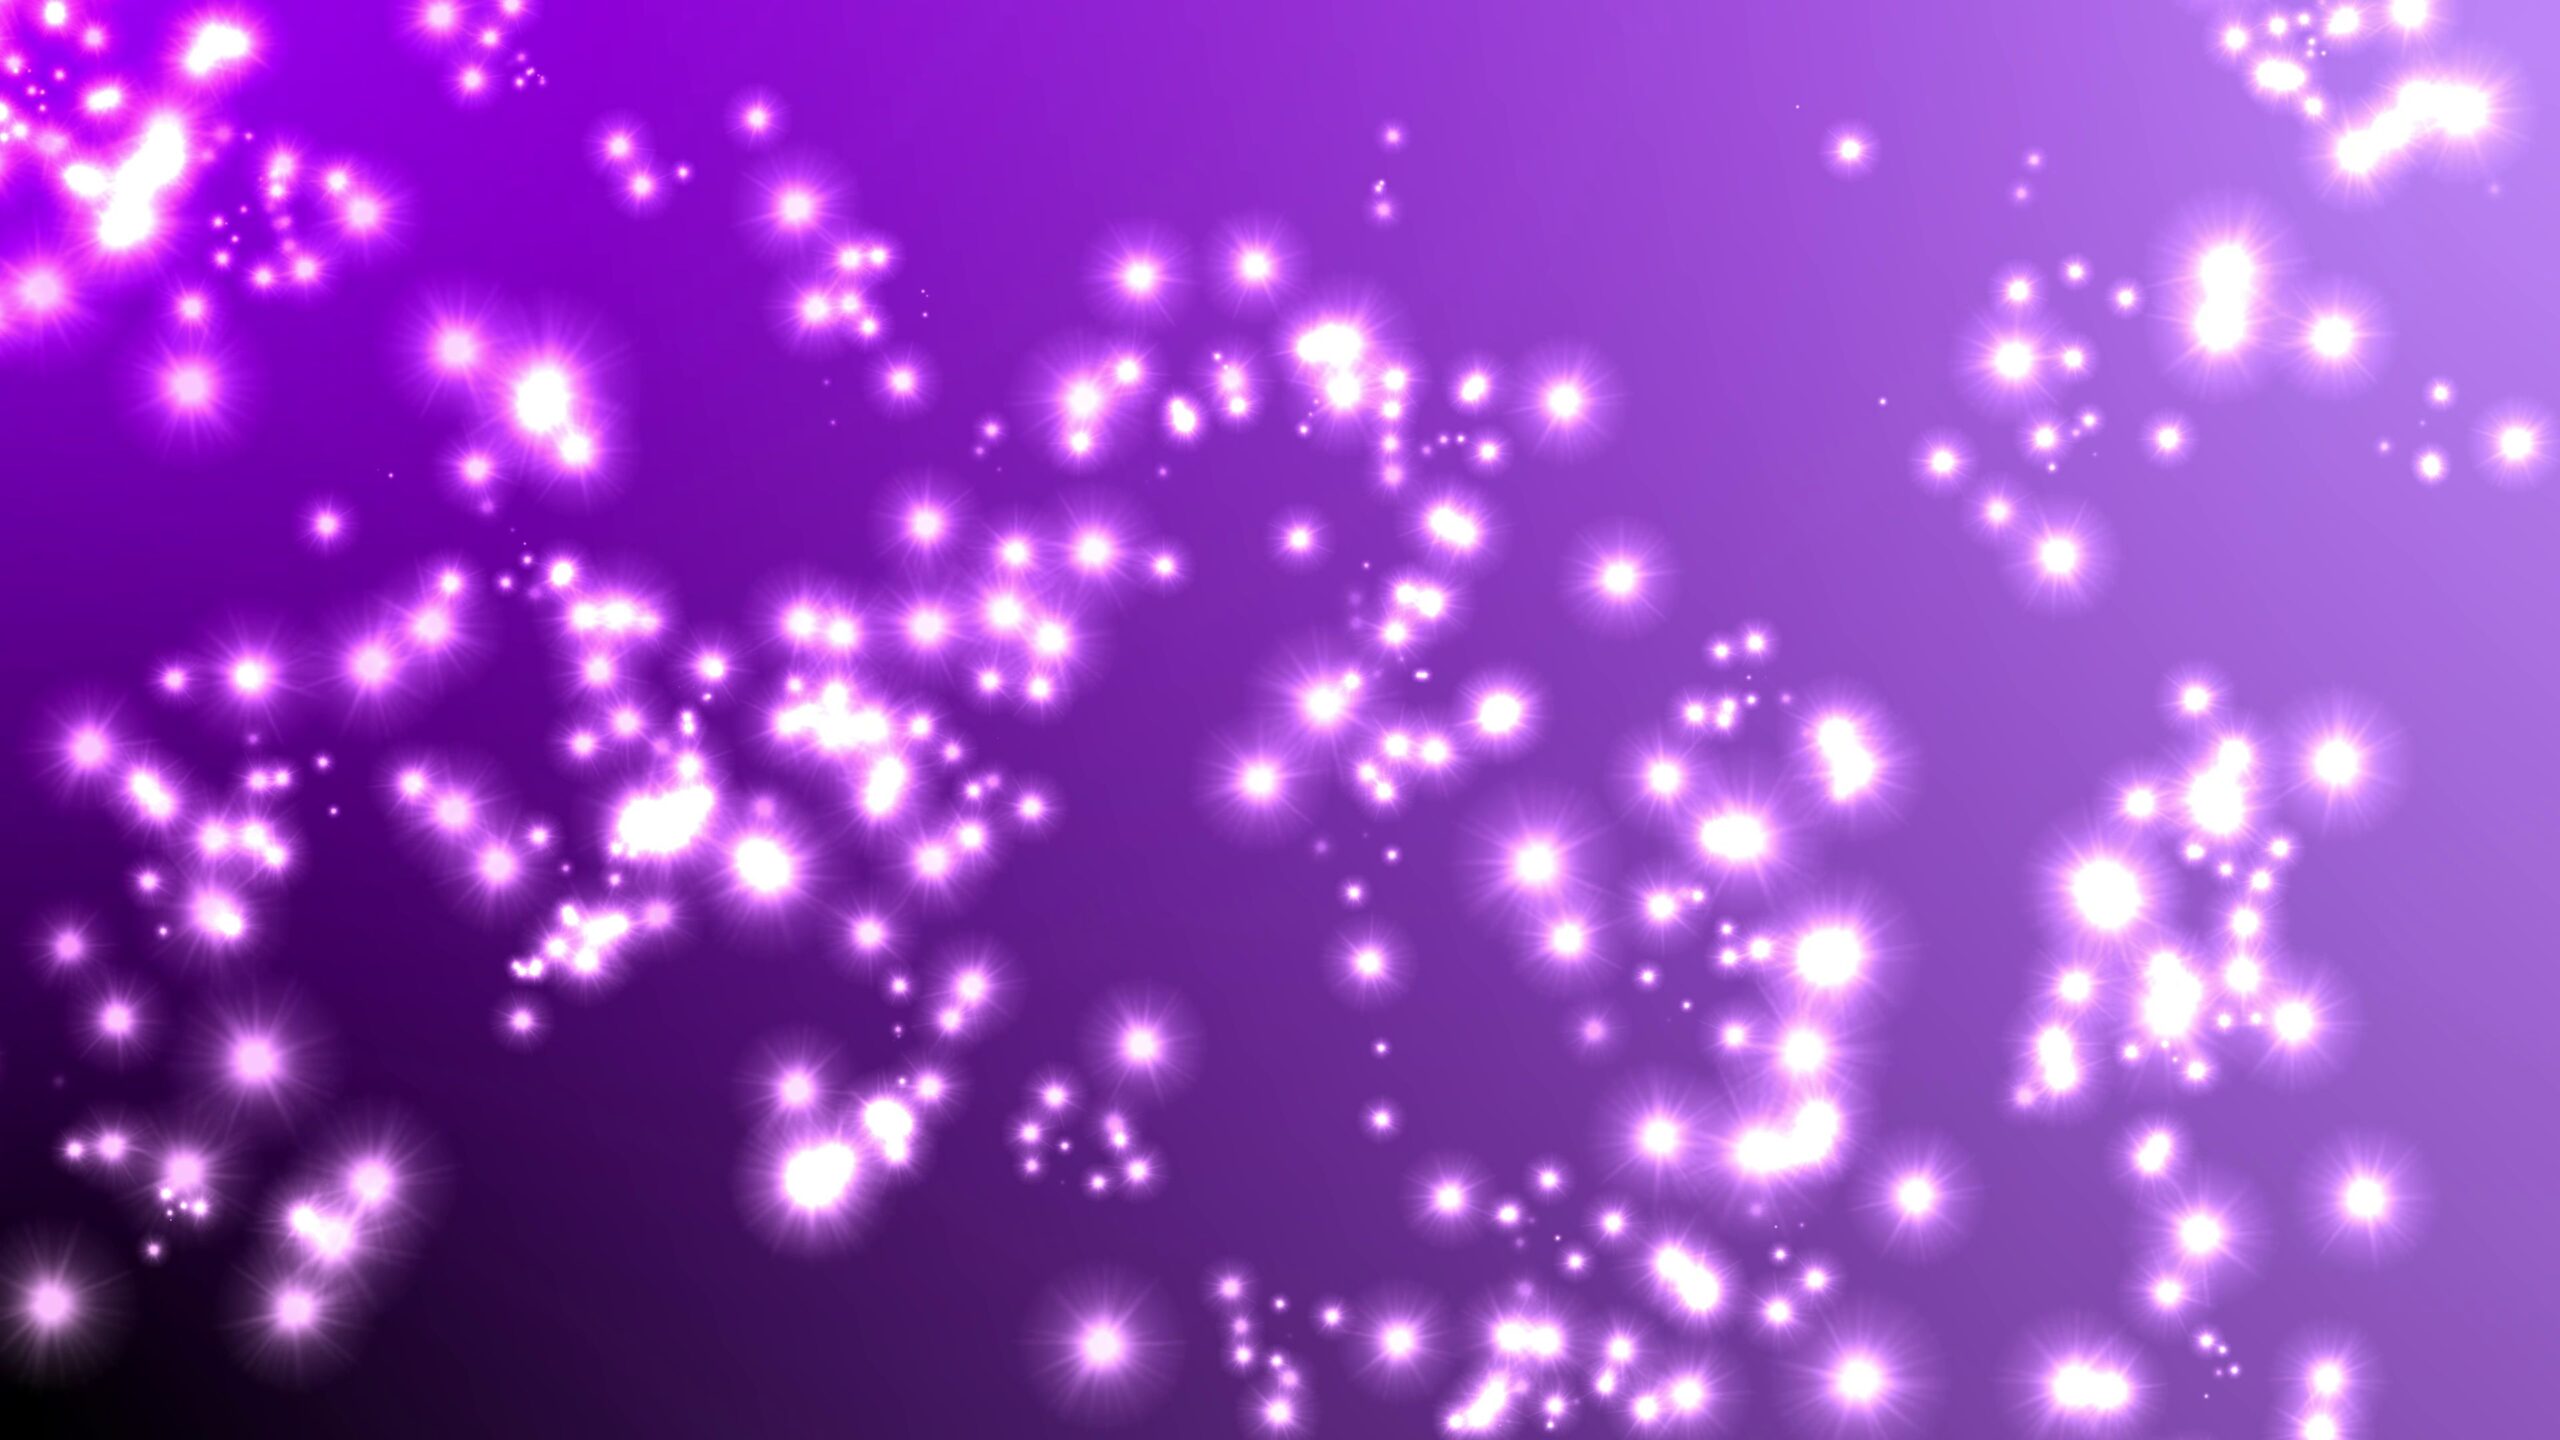 4K Shimmering Stars Motion Background || VFX Free To Use 4K Screensaver || FREE DOWNLOAD